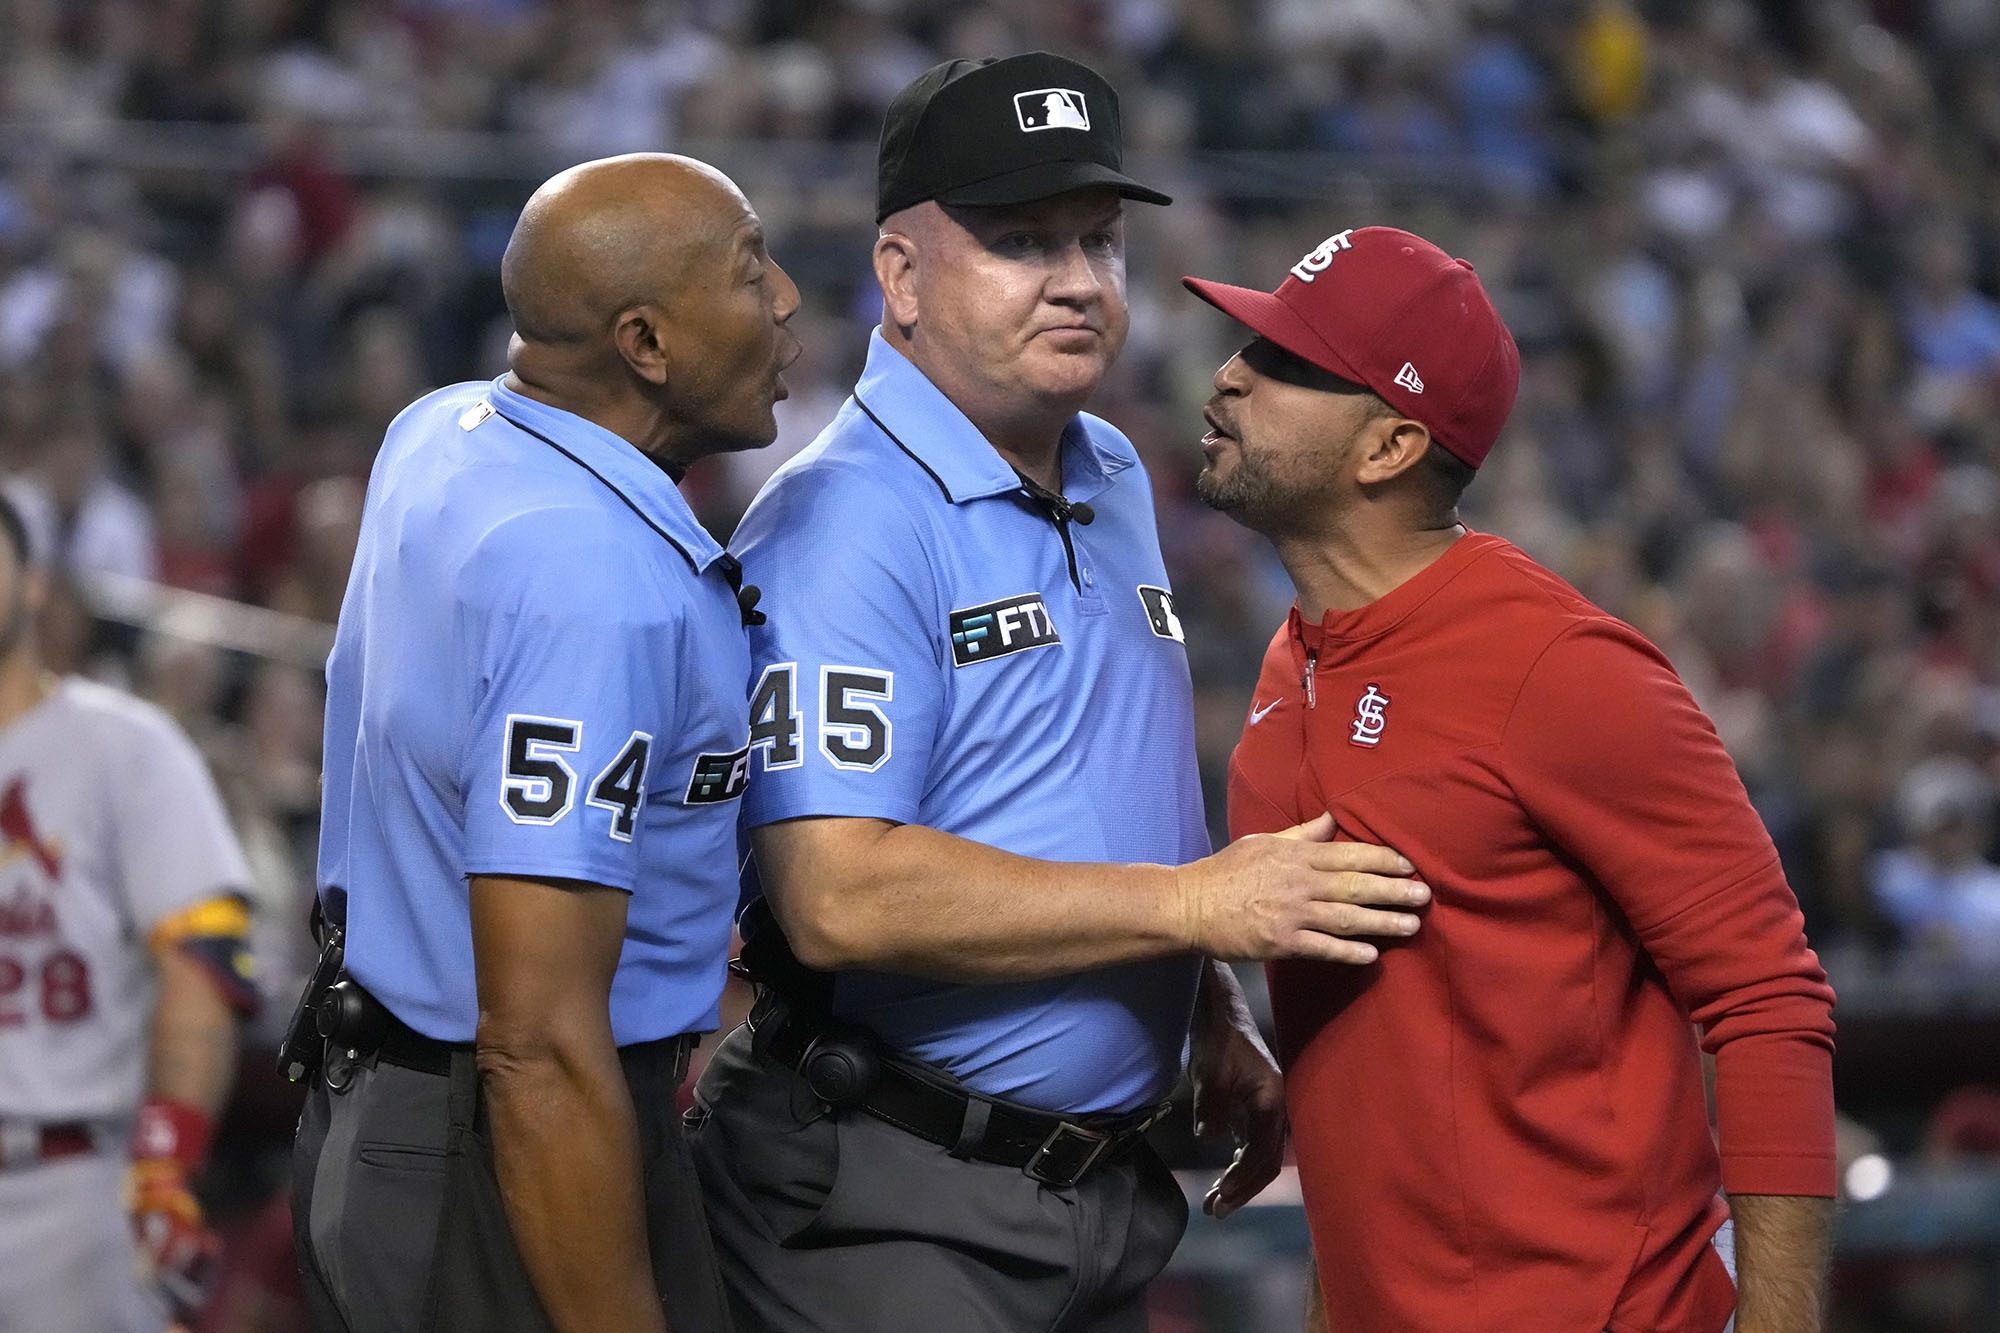 Cardinals' Marmol says umpire C.B. Bucknor 'has zero class' - WTOP News